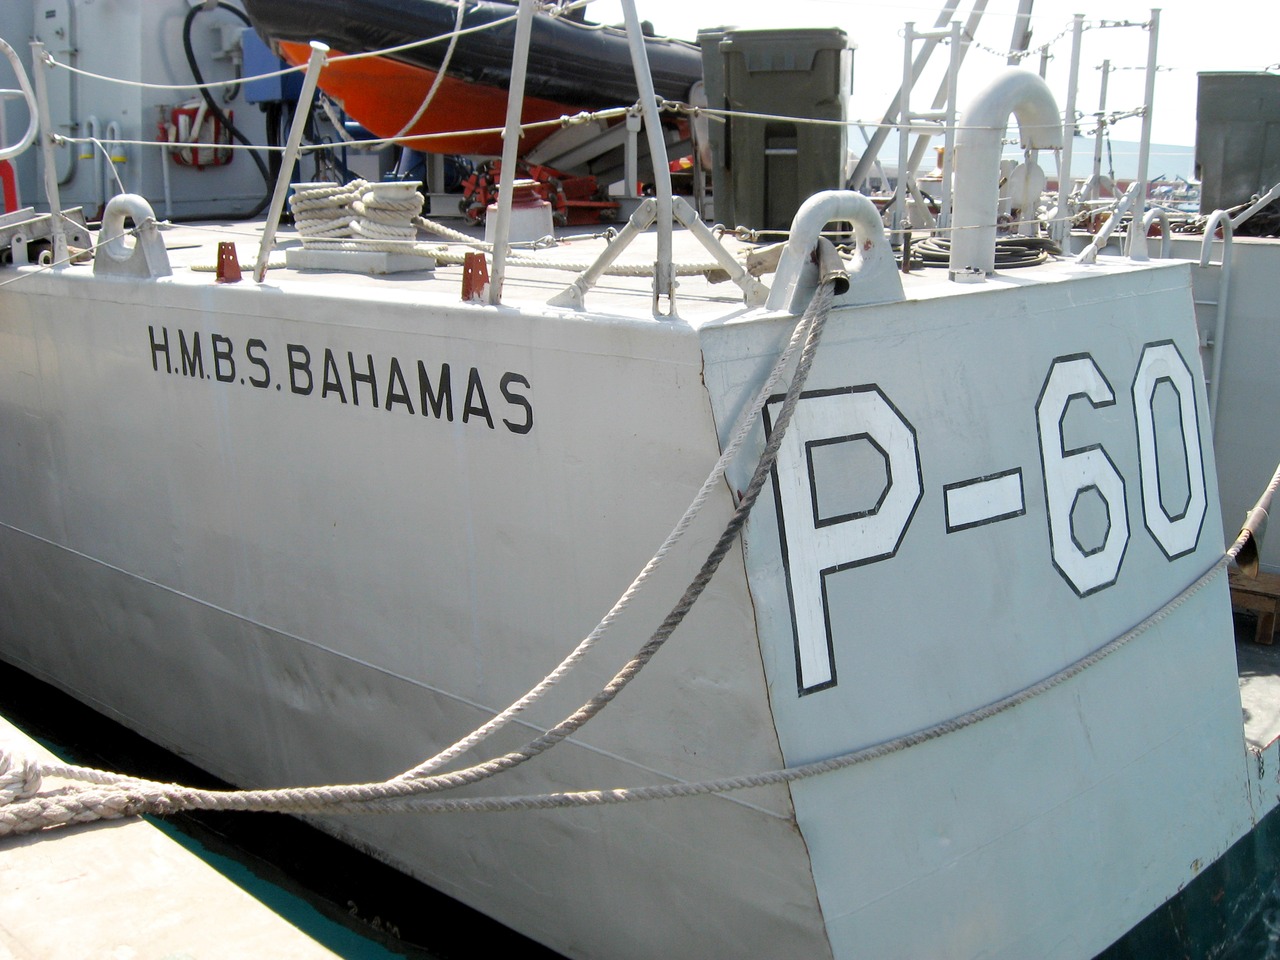 Royal Bahamas Defence Force offshore patrol vessel HMBS Bahamas P-60 docked at Prince George Wharf, Port of Nassau.